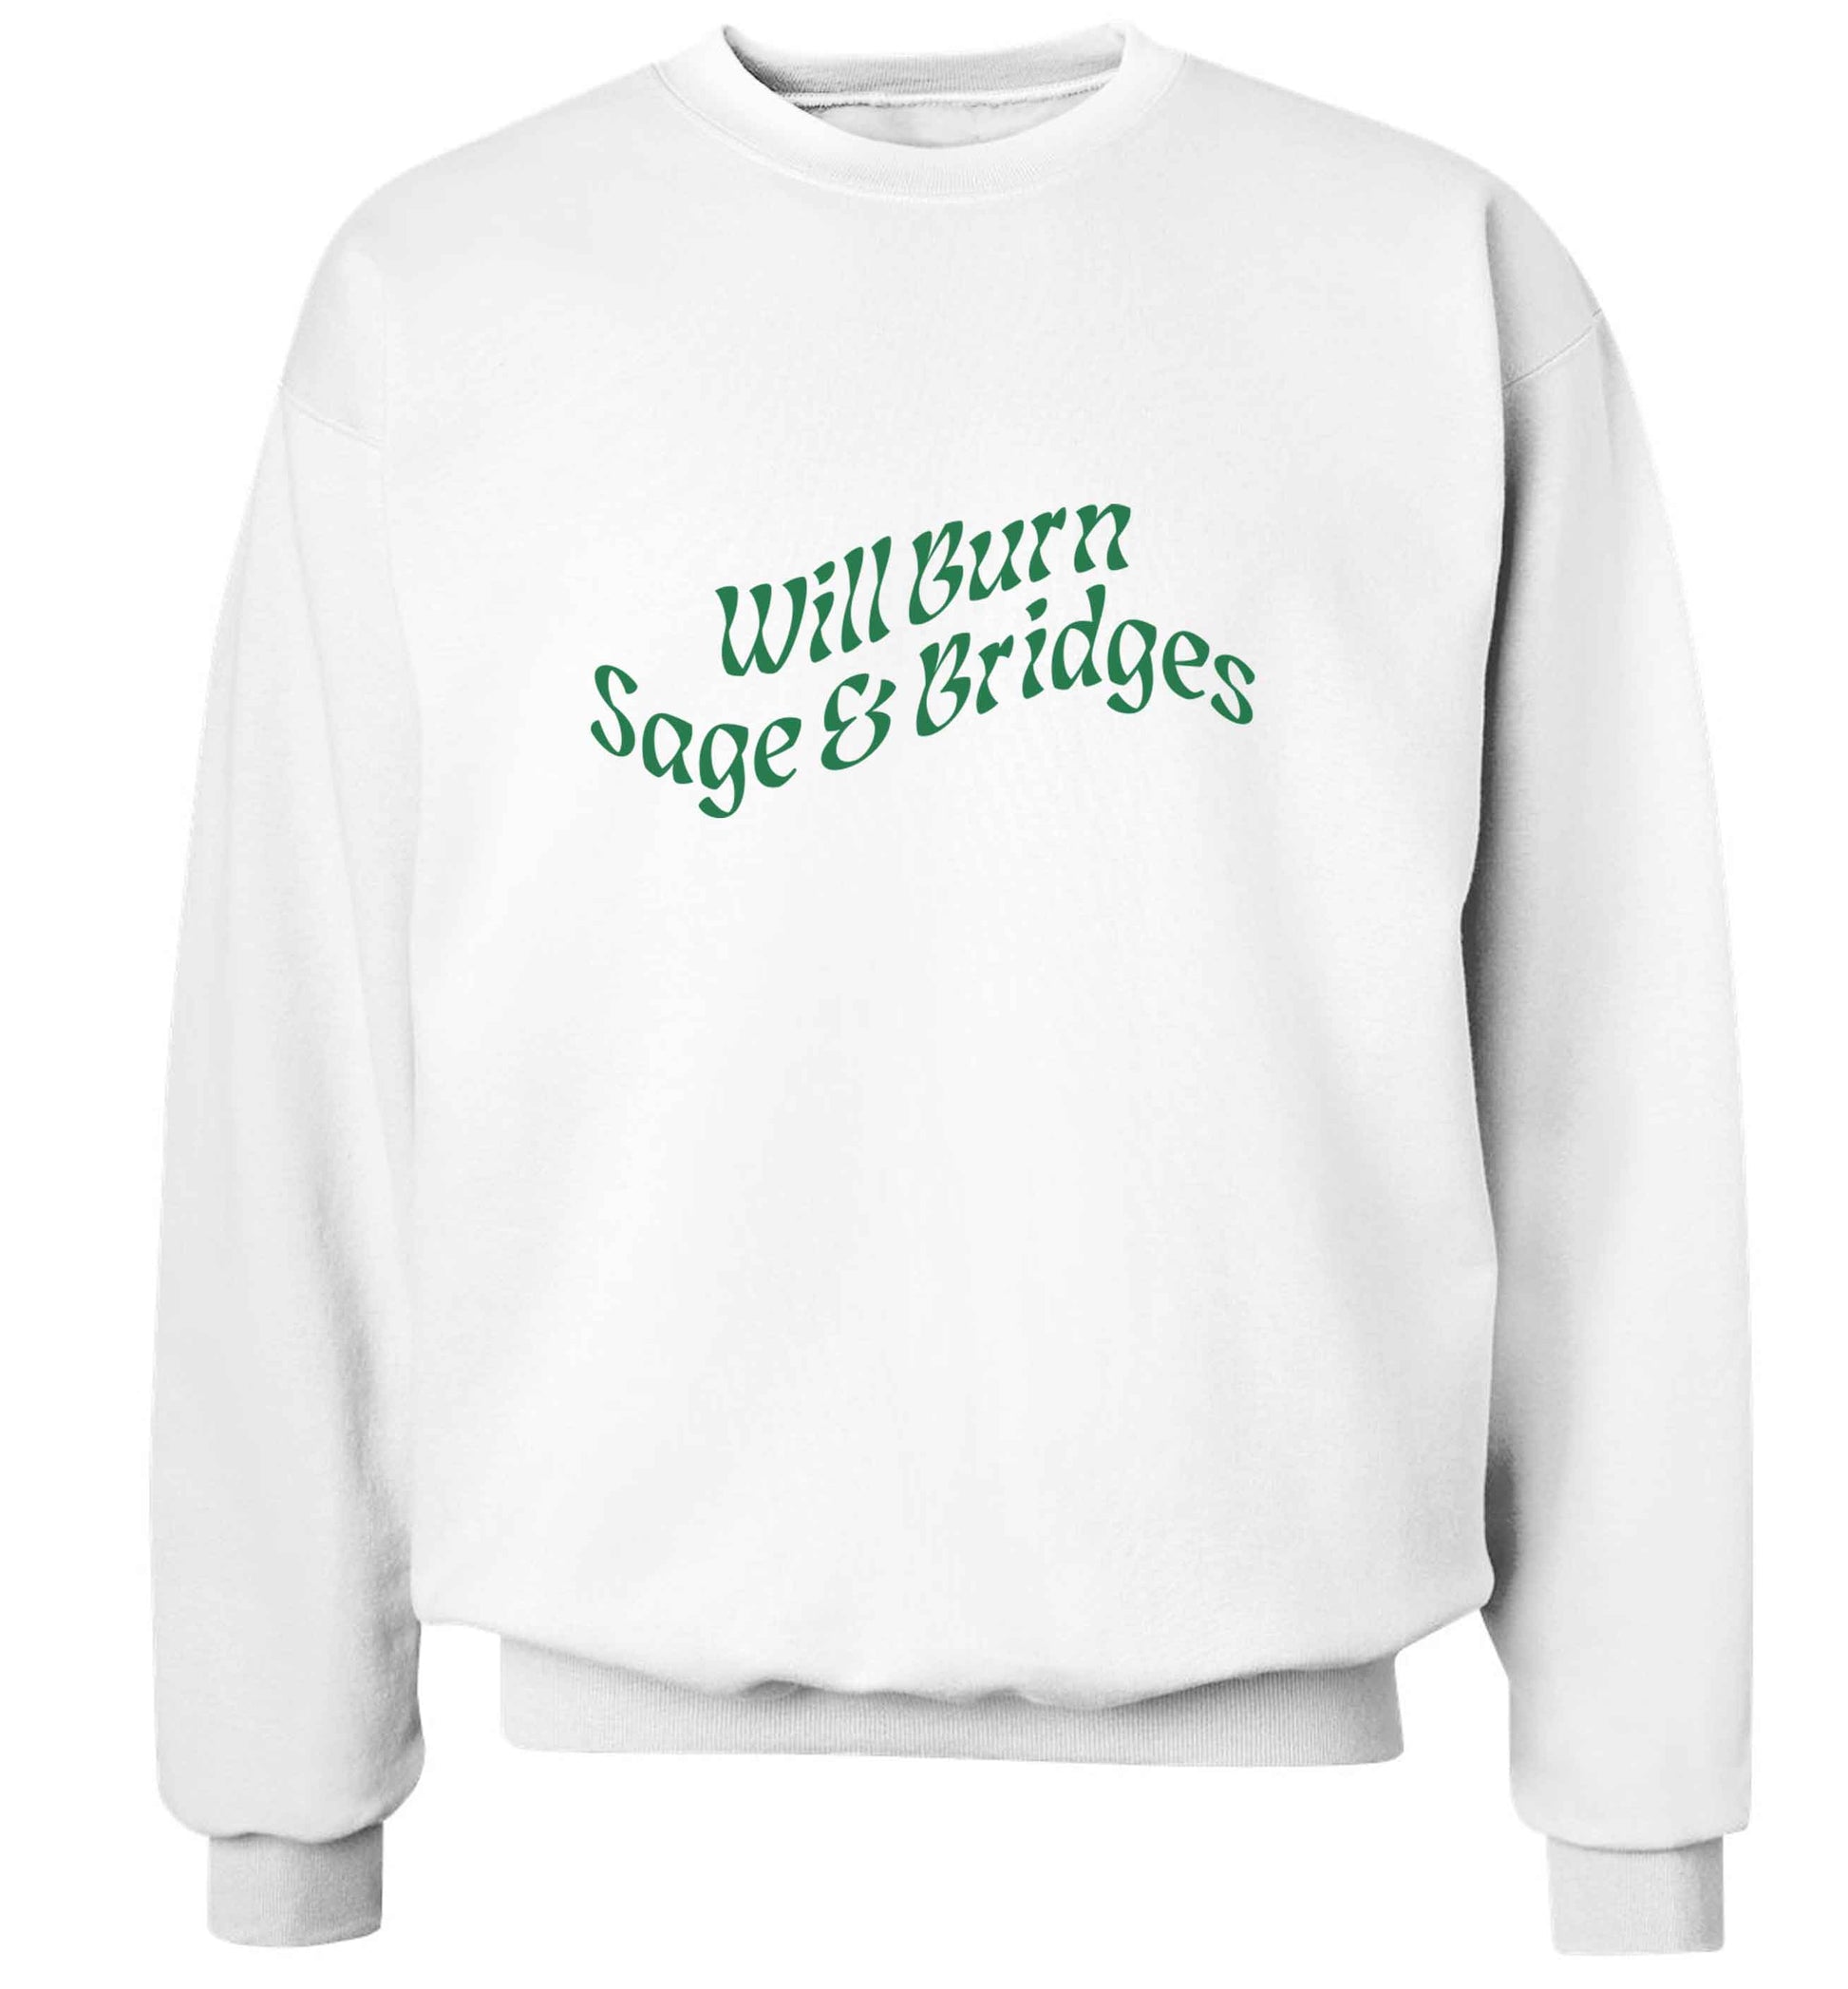 Will burn bridges and sage adult's unisex white sweater 2XL